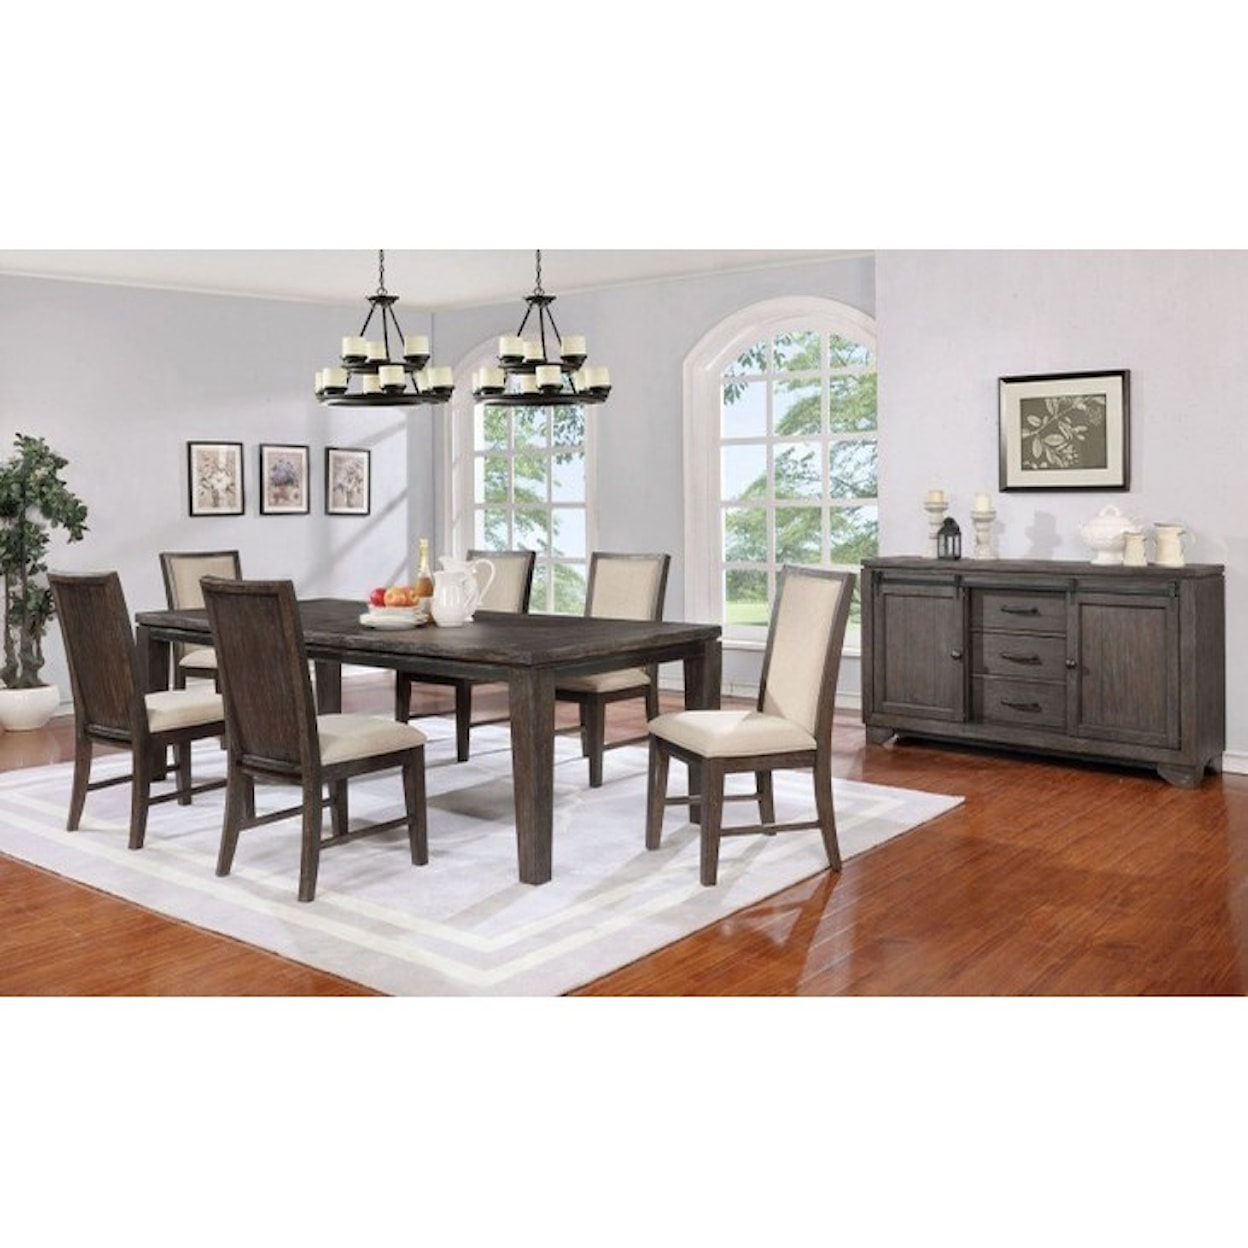 Avalon Furniture Homestead Formal Dining Room Group